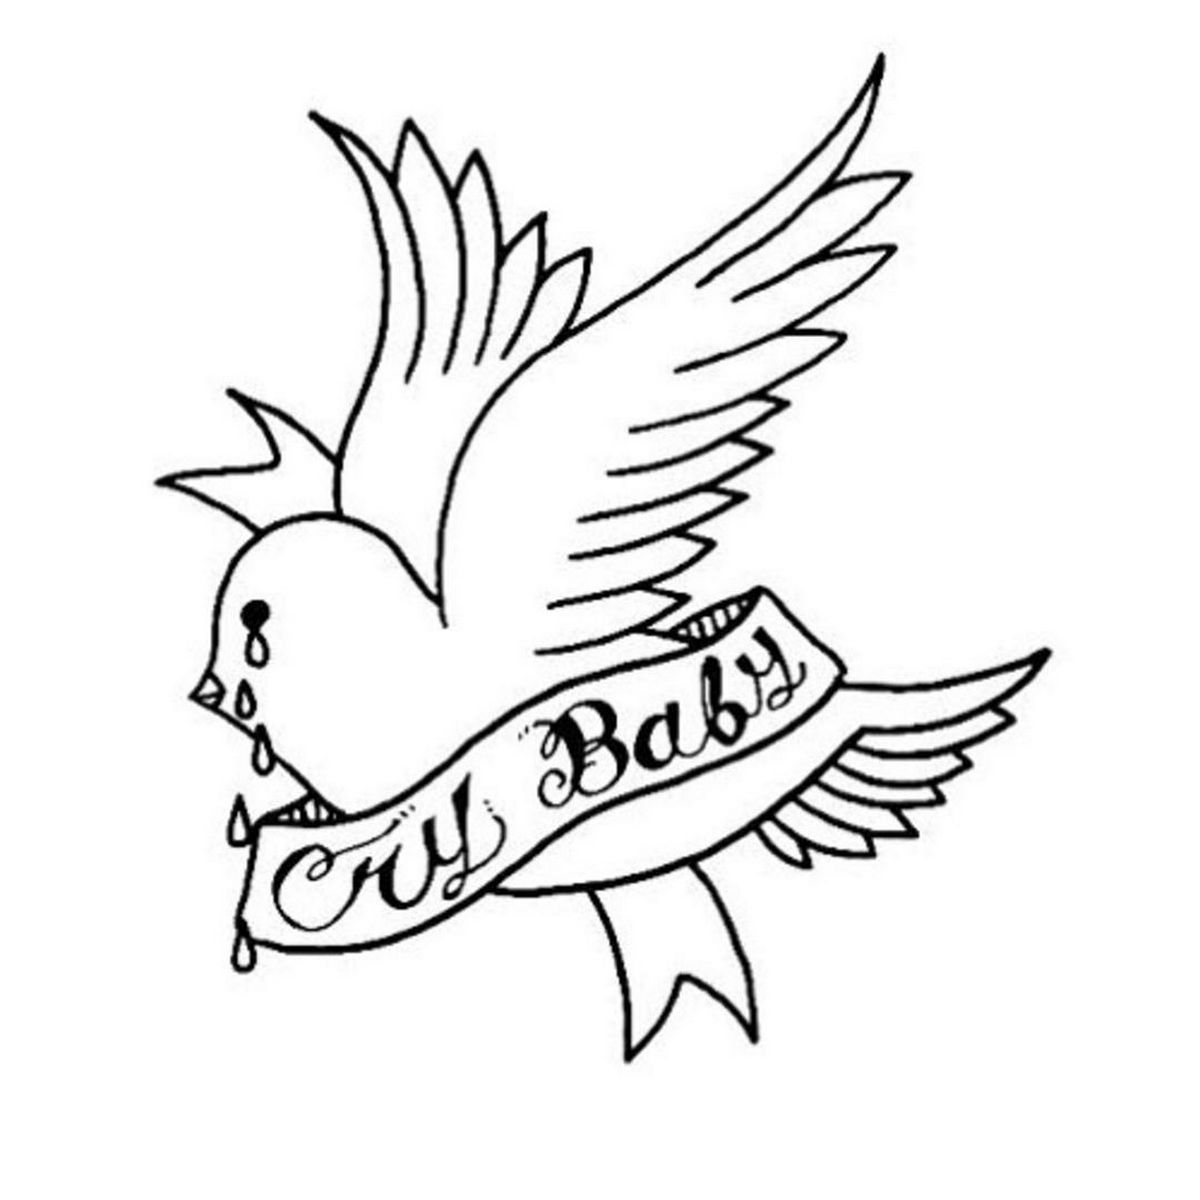 酷形象设计-Lil Peep Crybaby纹身